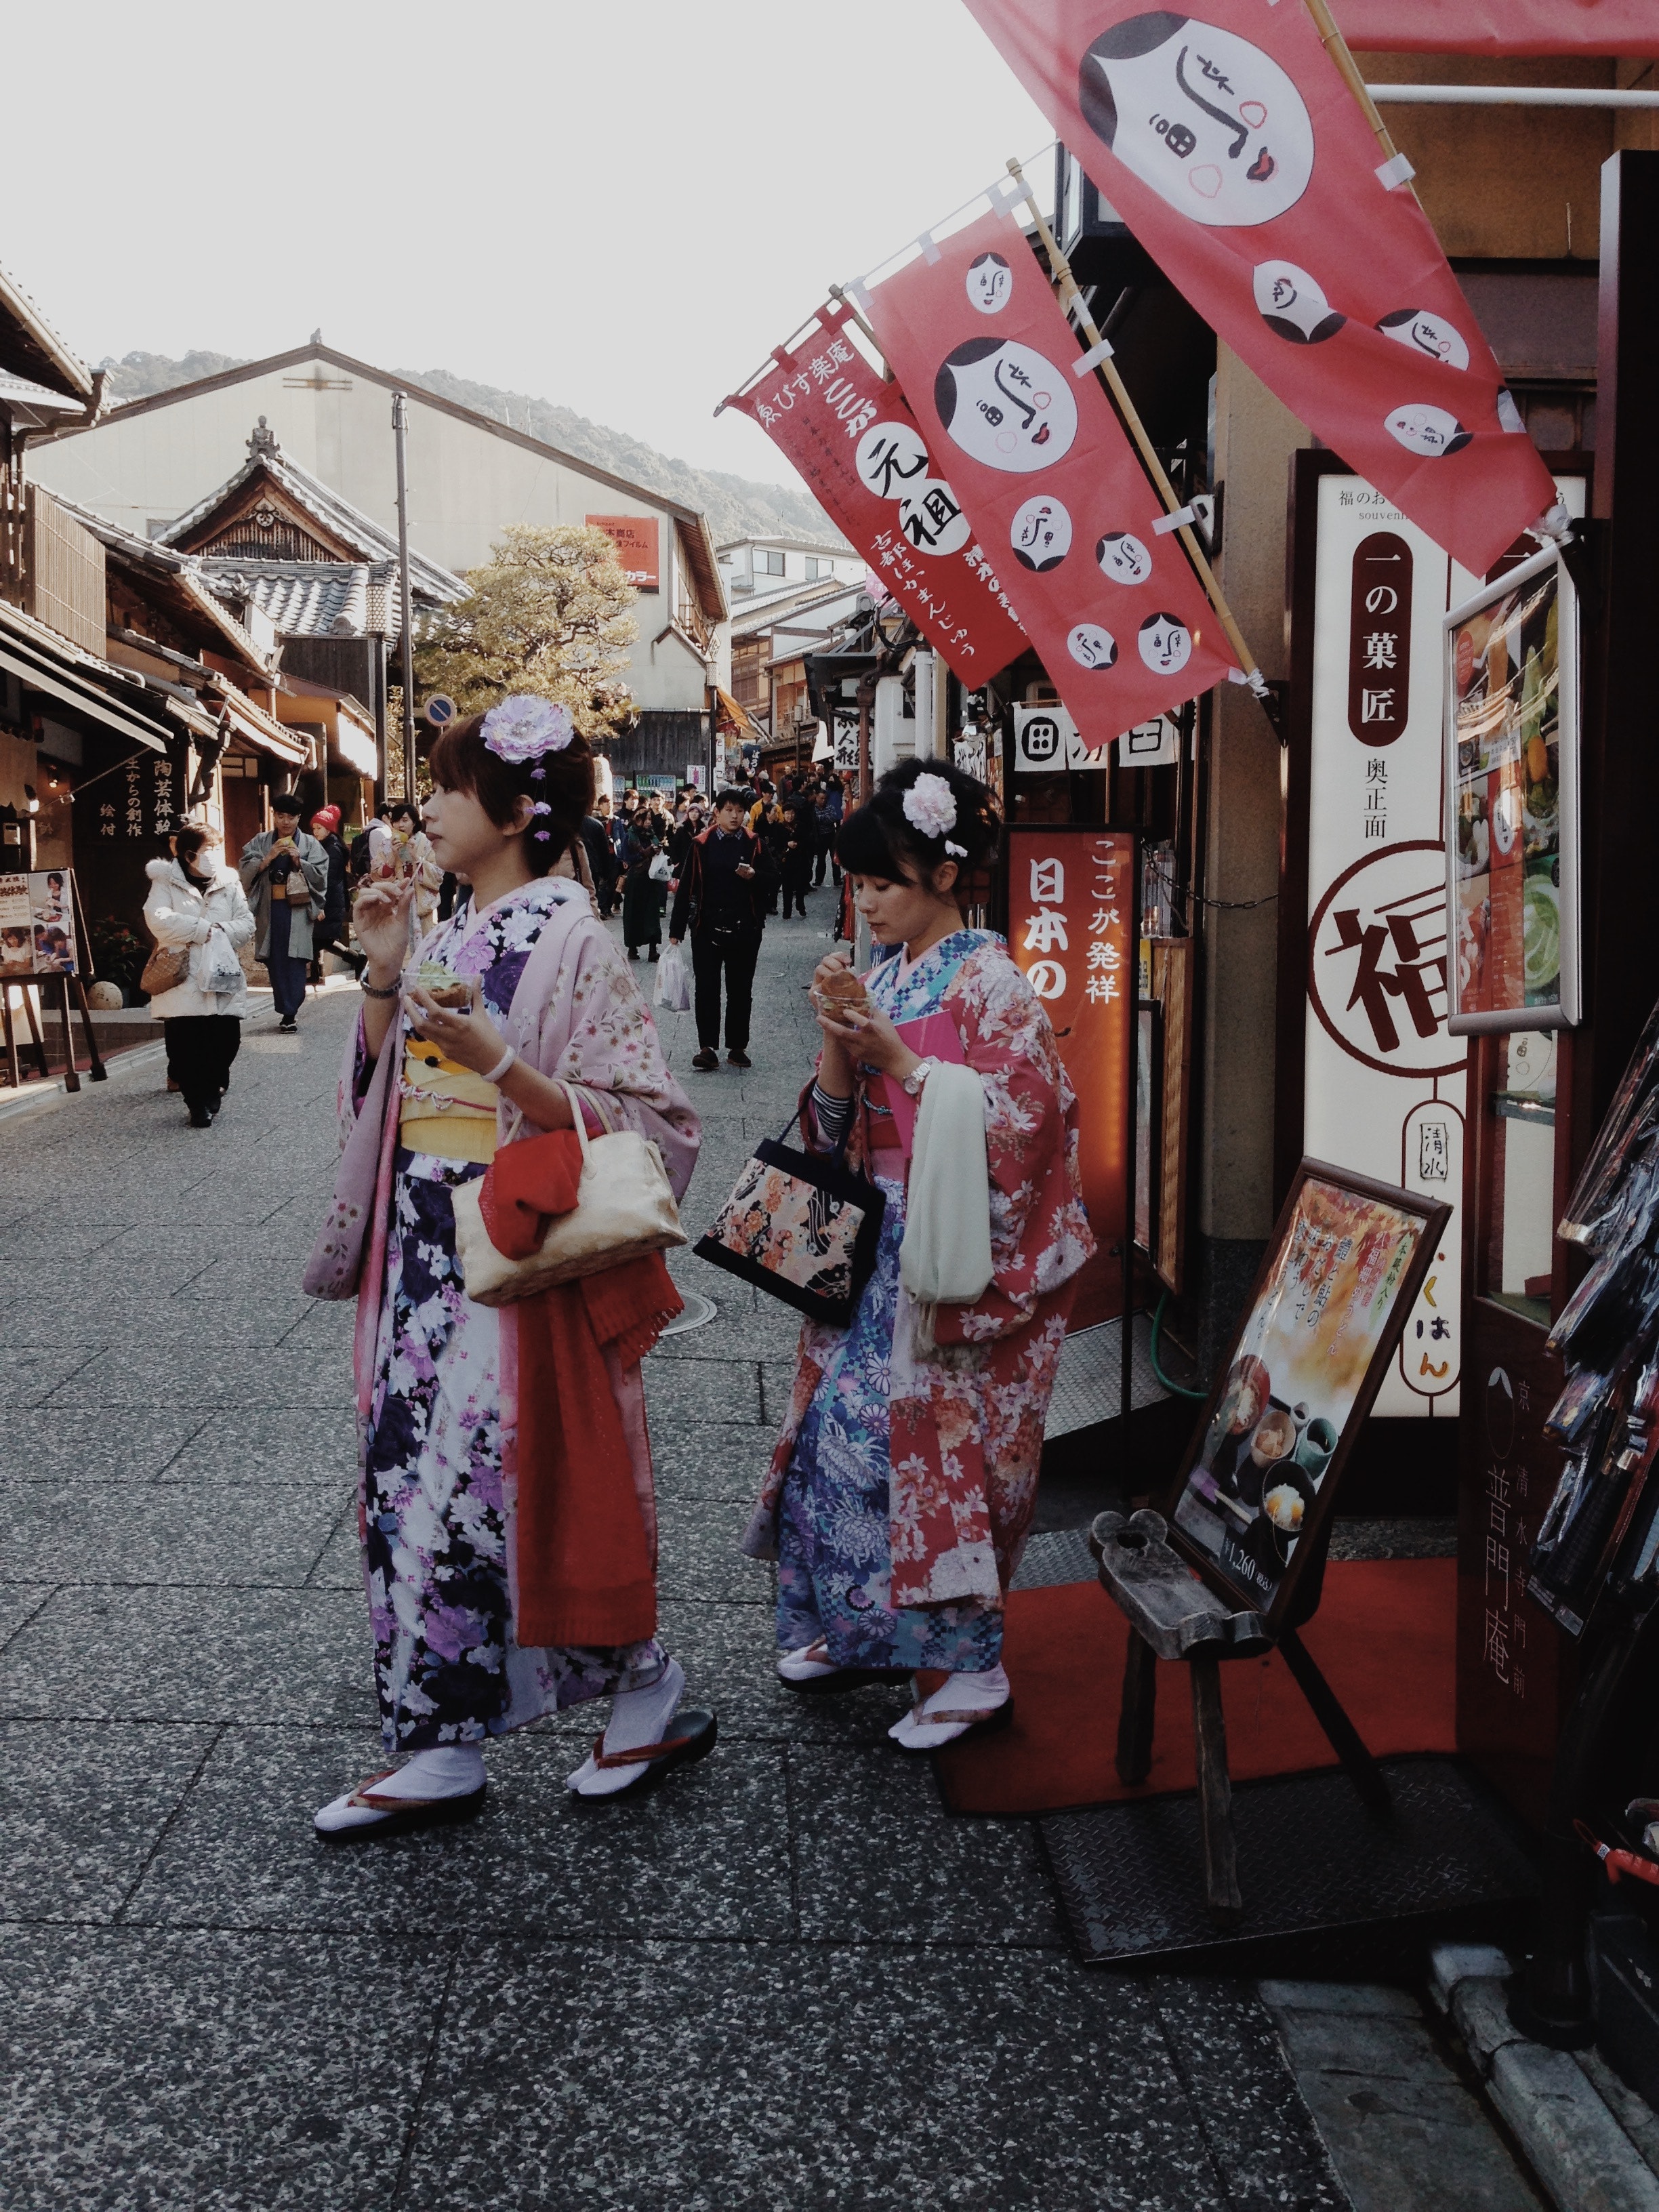 Japanese ladies in kimonos